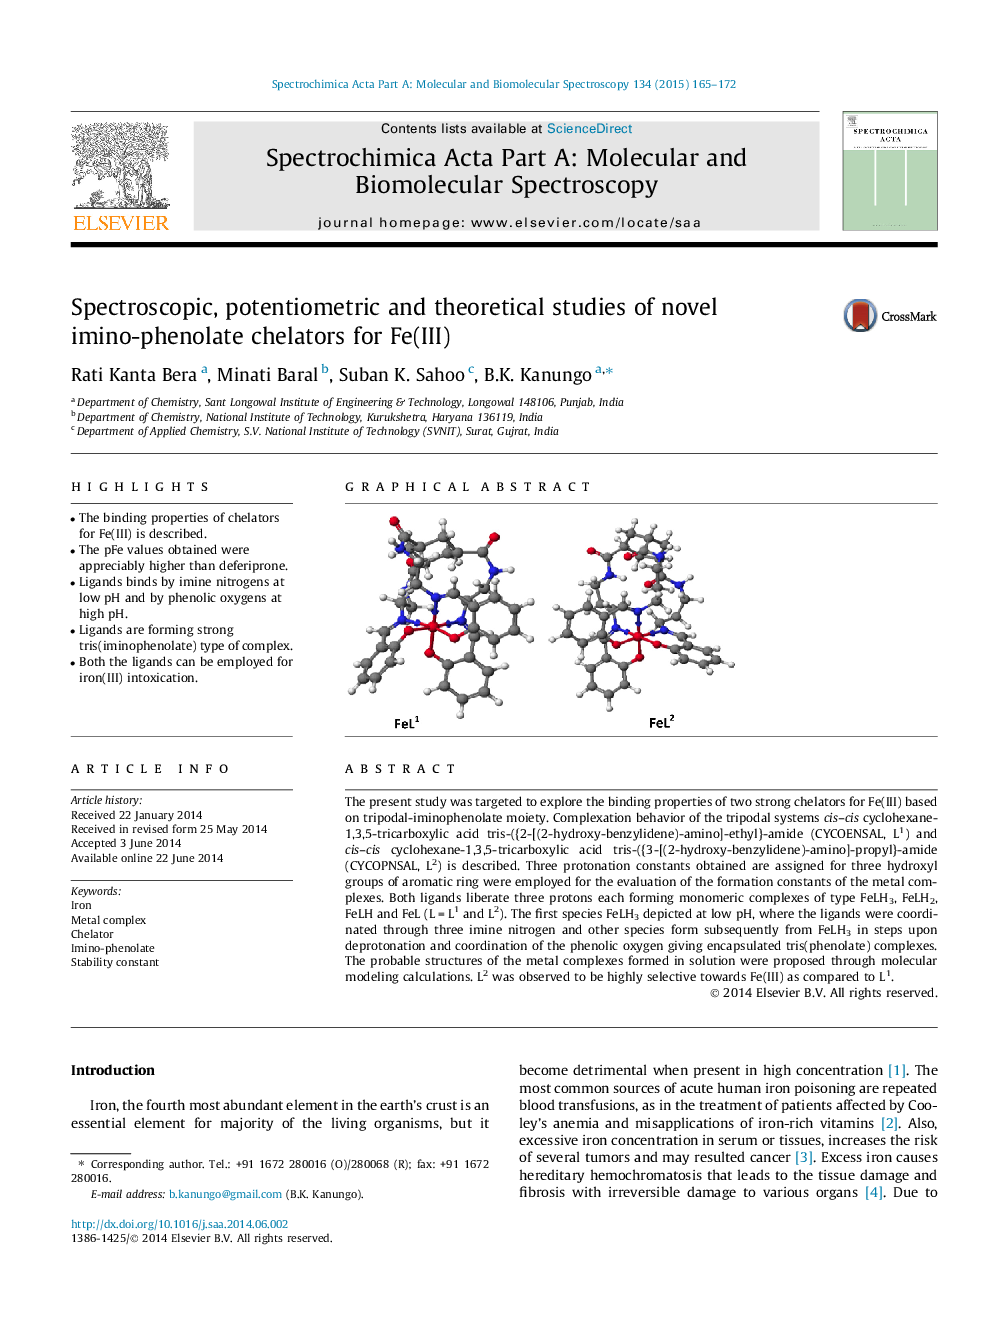 Spectroscopic, potentiometric and theoretical studies of novel imino-phenolate chelators for Fe(III)